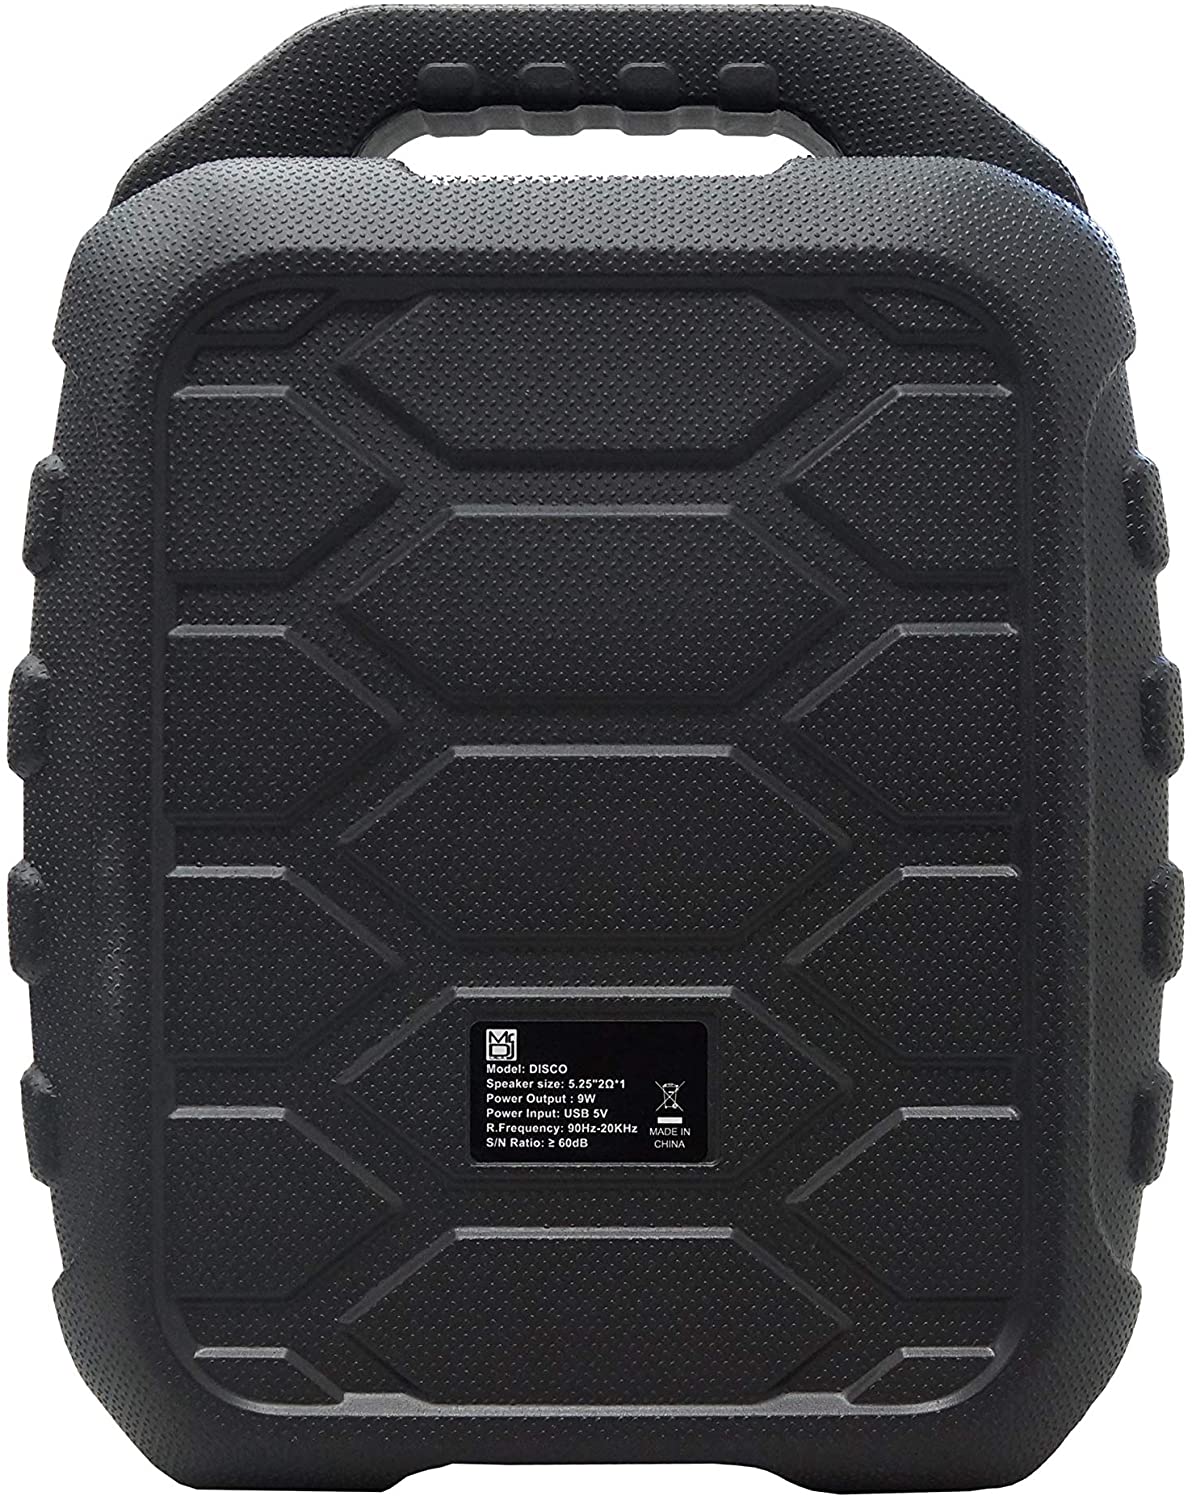 MR. DJ DISCO 5.25" portable speaker w/ Bluetooth rechargeable battery & led light